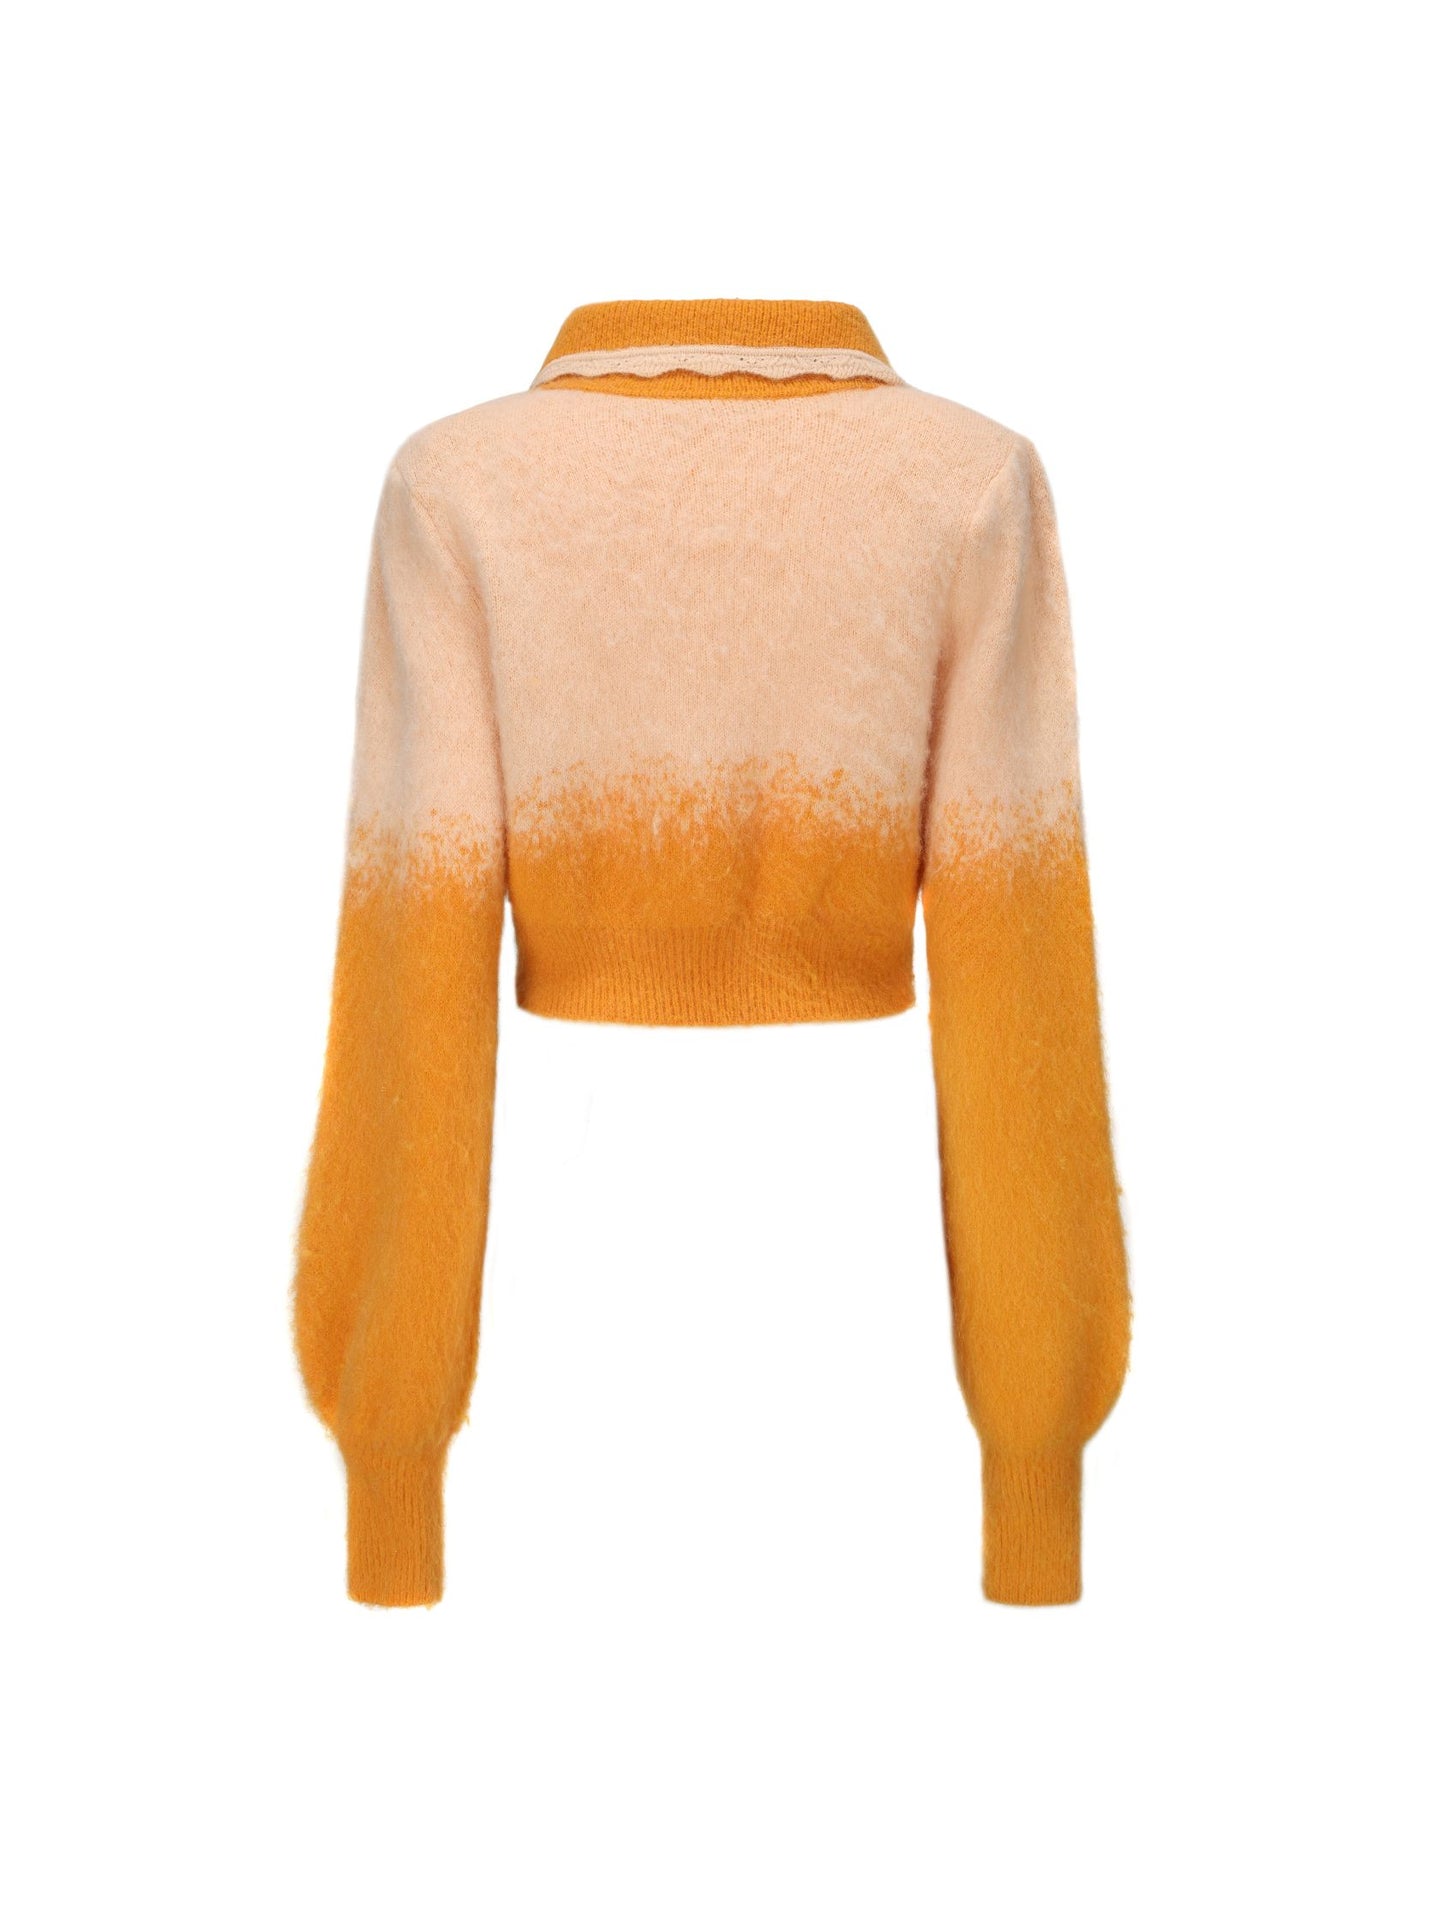 Emily Knit Cardigan Set (Orange) (Final Sale)